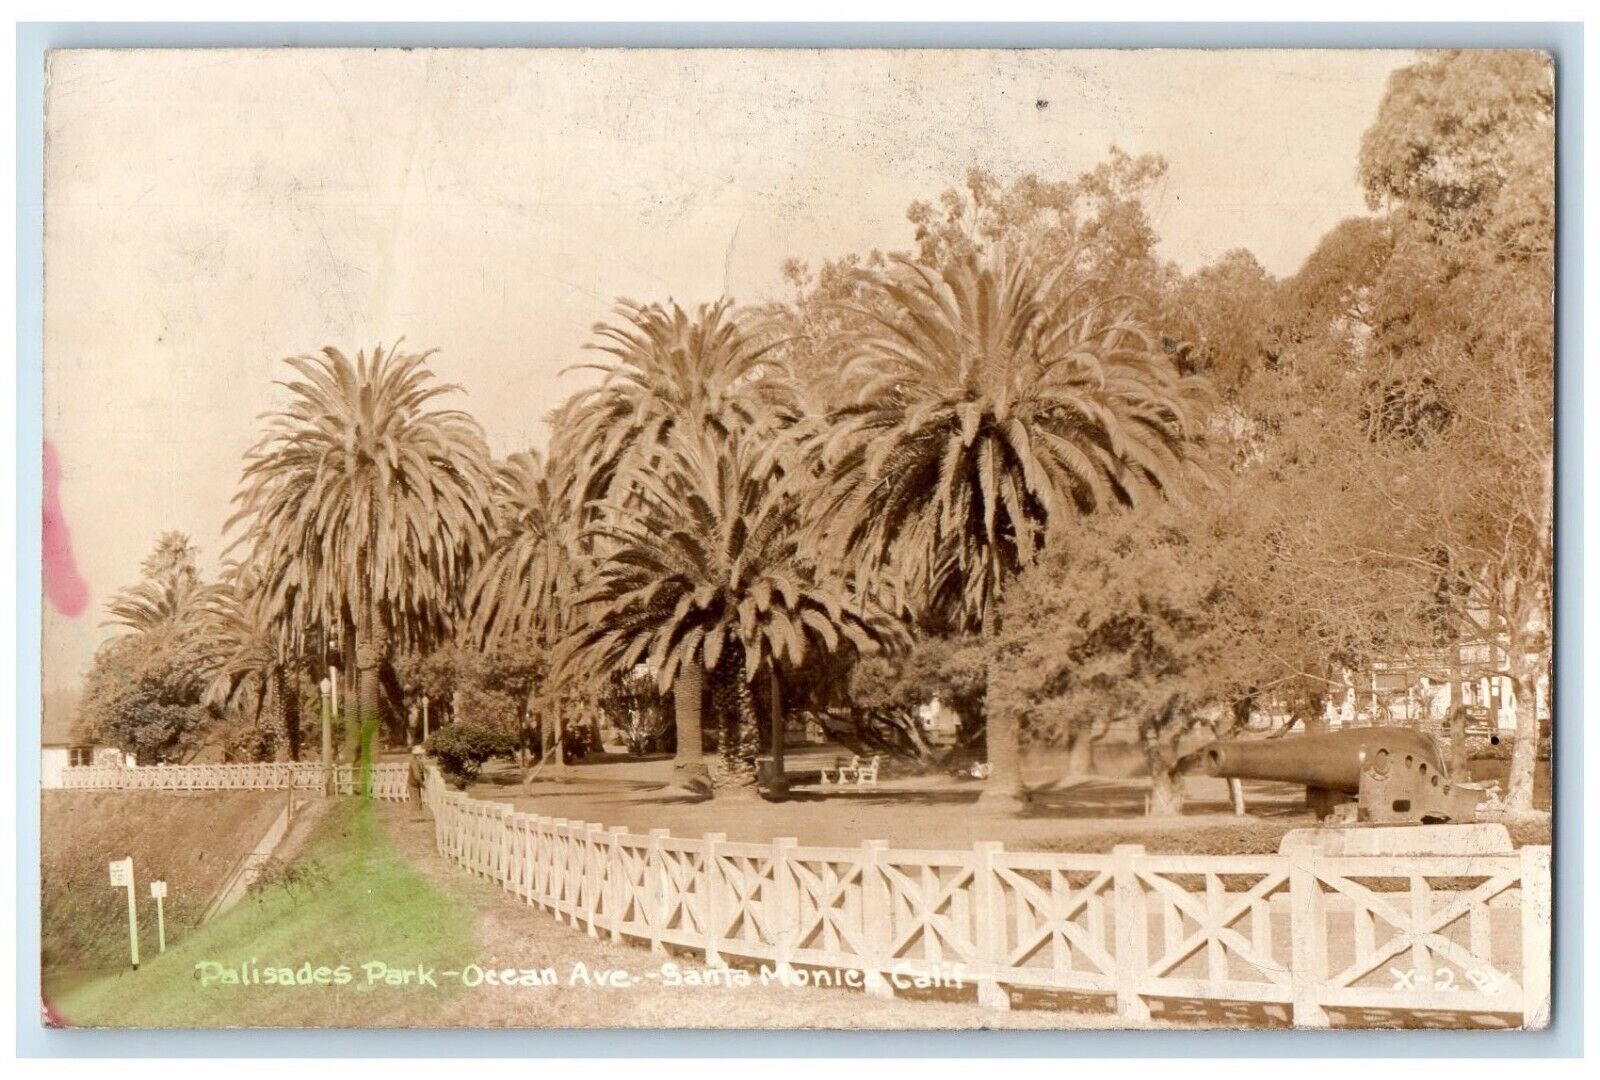 1953 Palisades Park Ocean Ave. Santa Monica California CA RPPC Photo Postcard